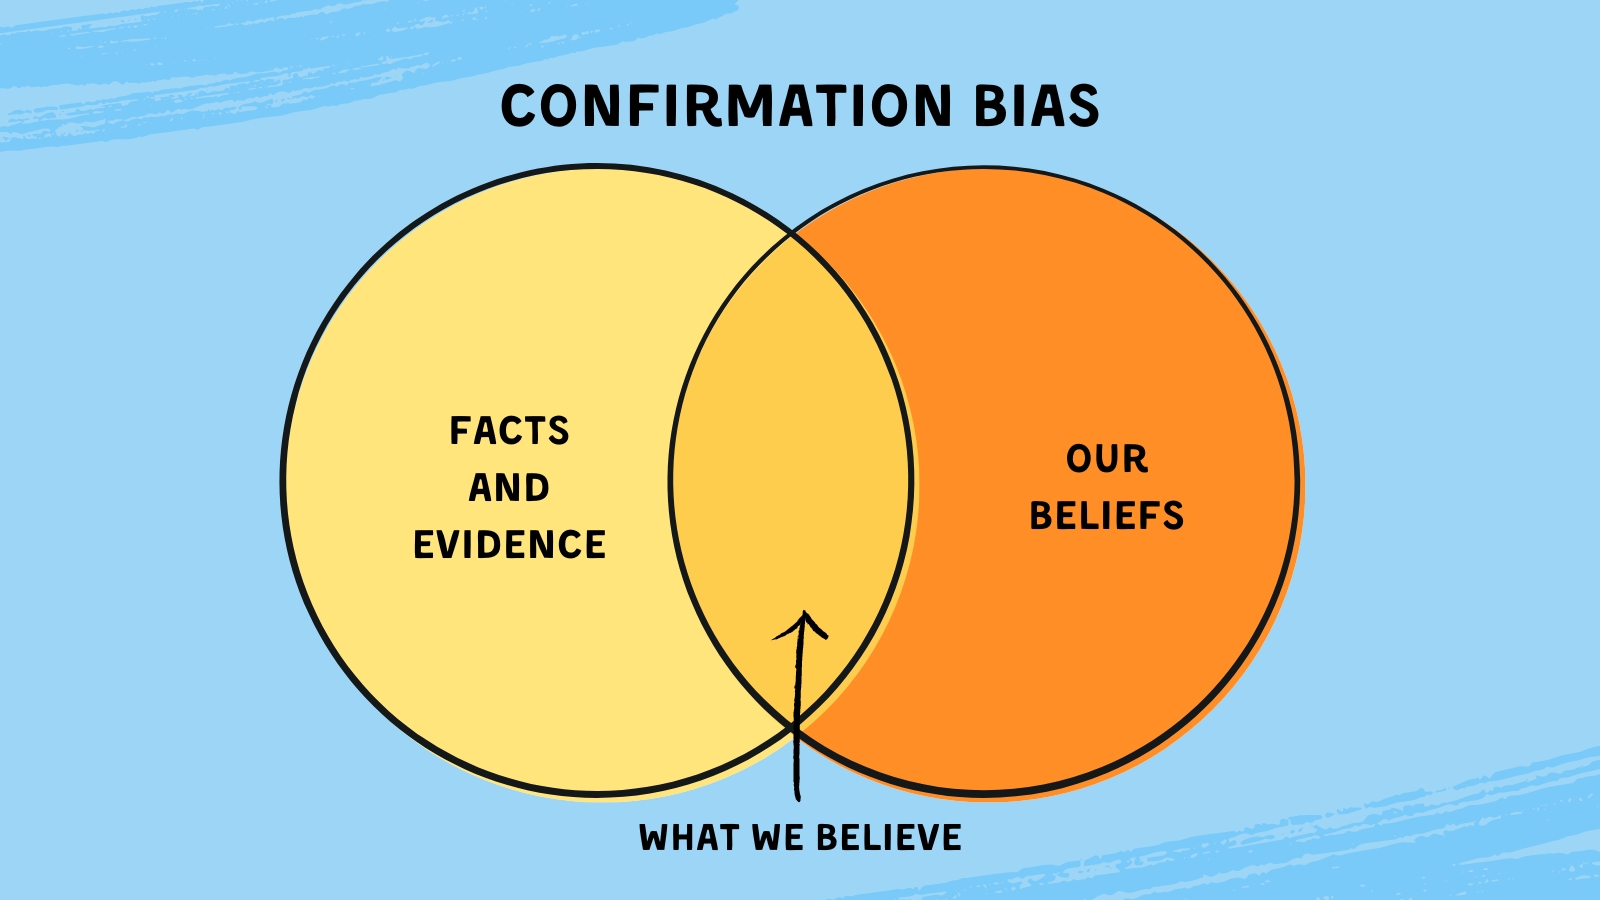 Graphic organizer on confirmation bias